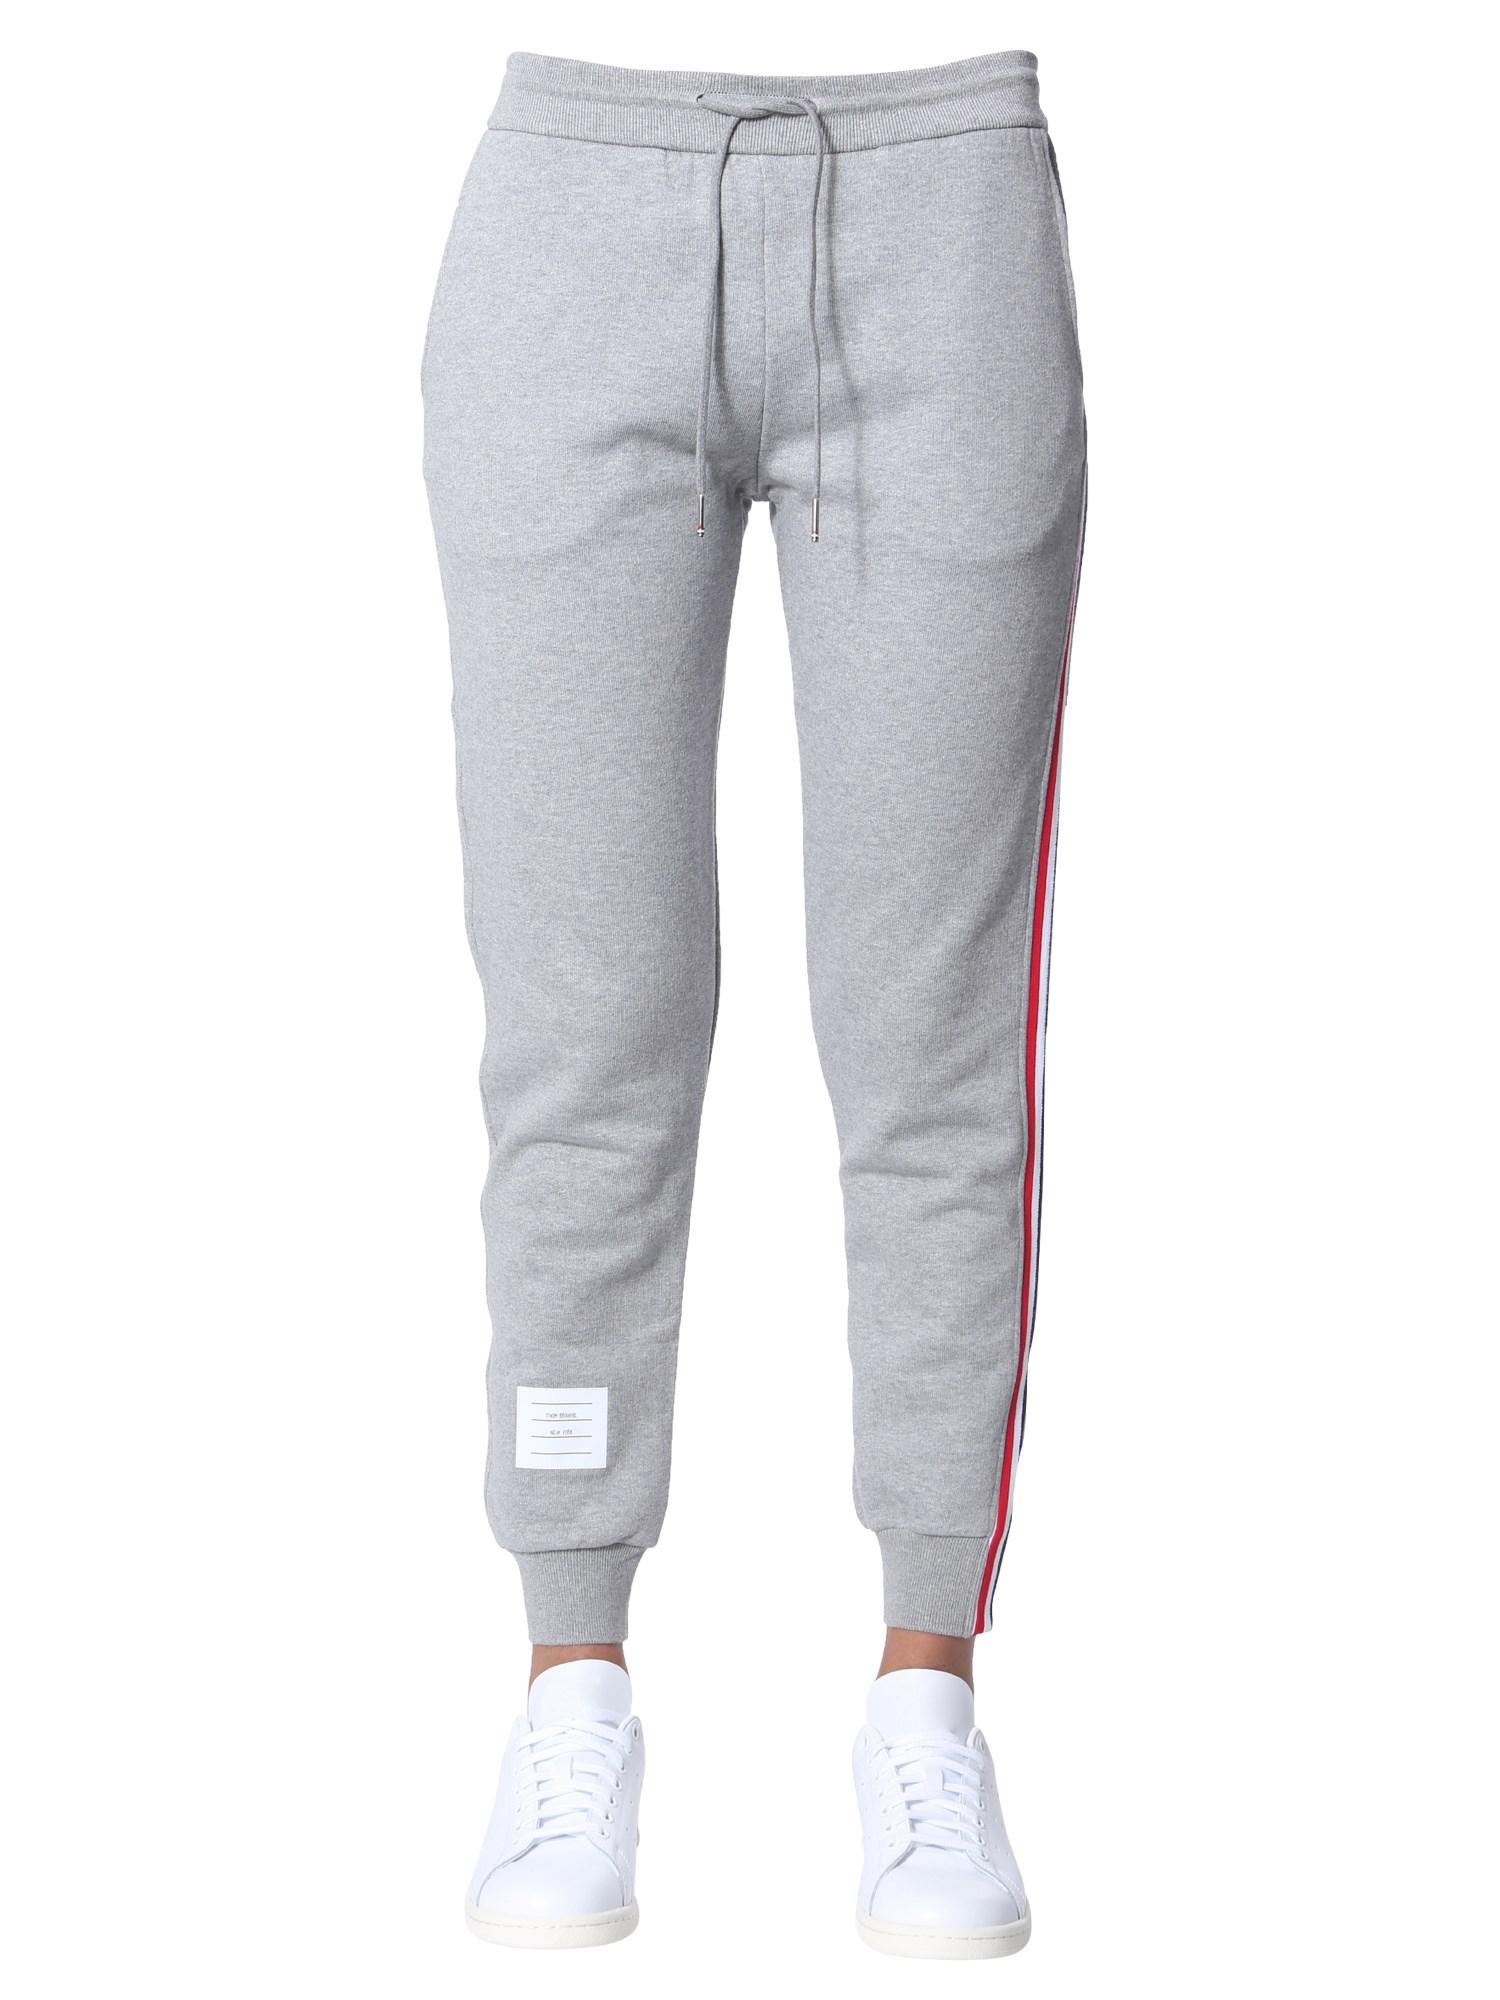 Thom Browne jogging Pants in Grey (Gray) - Lyst